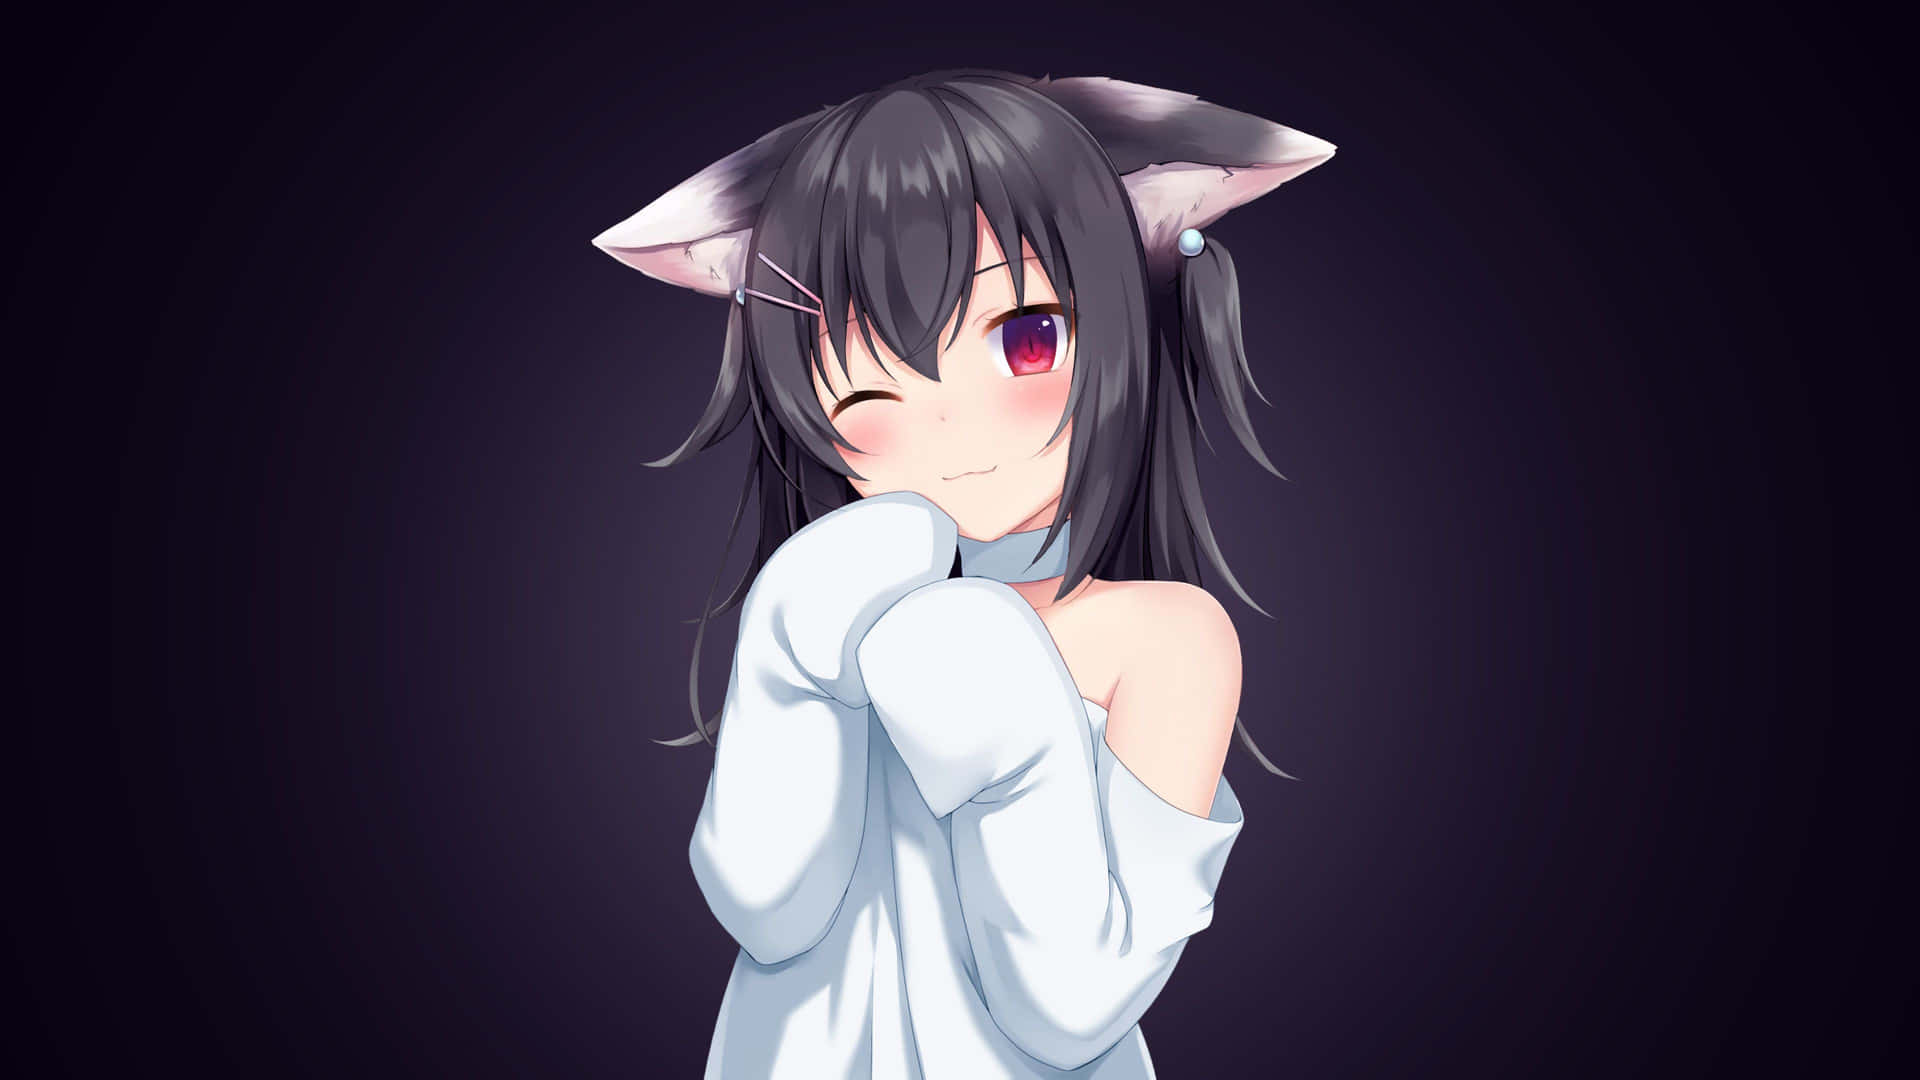 Shy Anime Girlwith Cat Ears Wallpaper